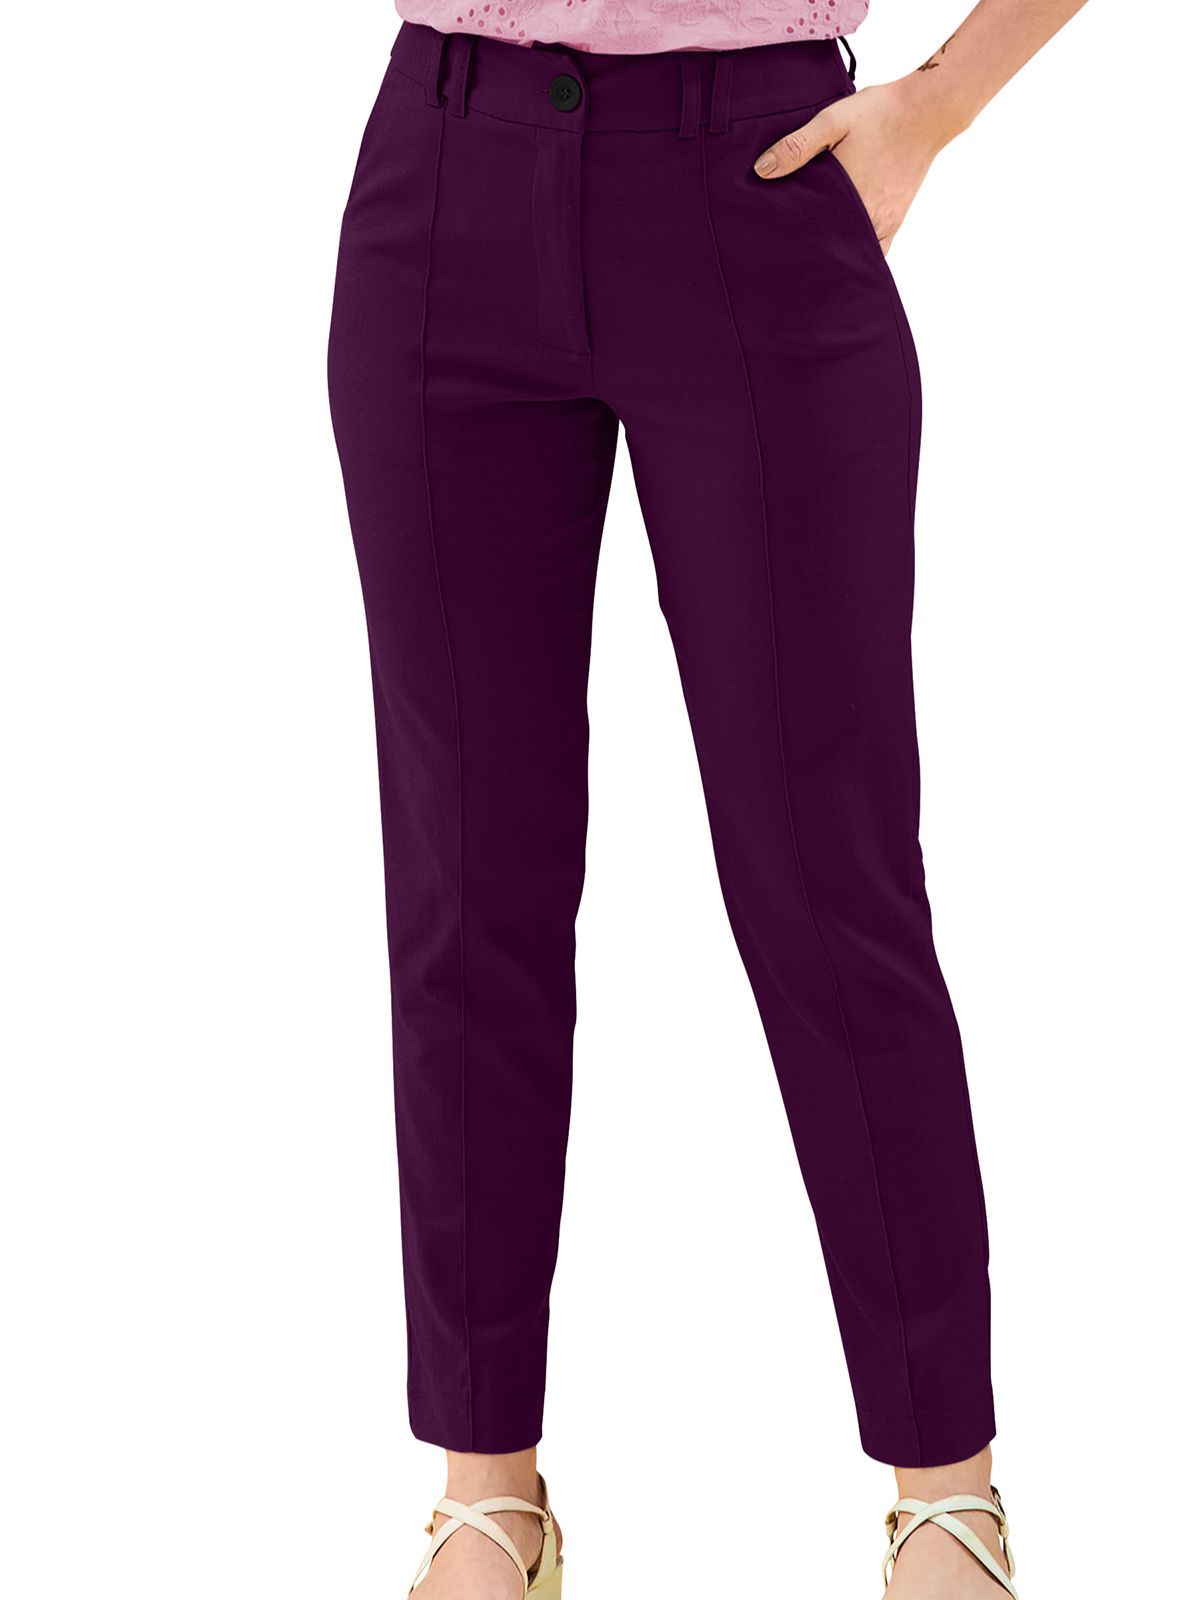 Odette Purple Polyester Trouser For Women